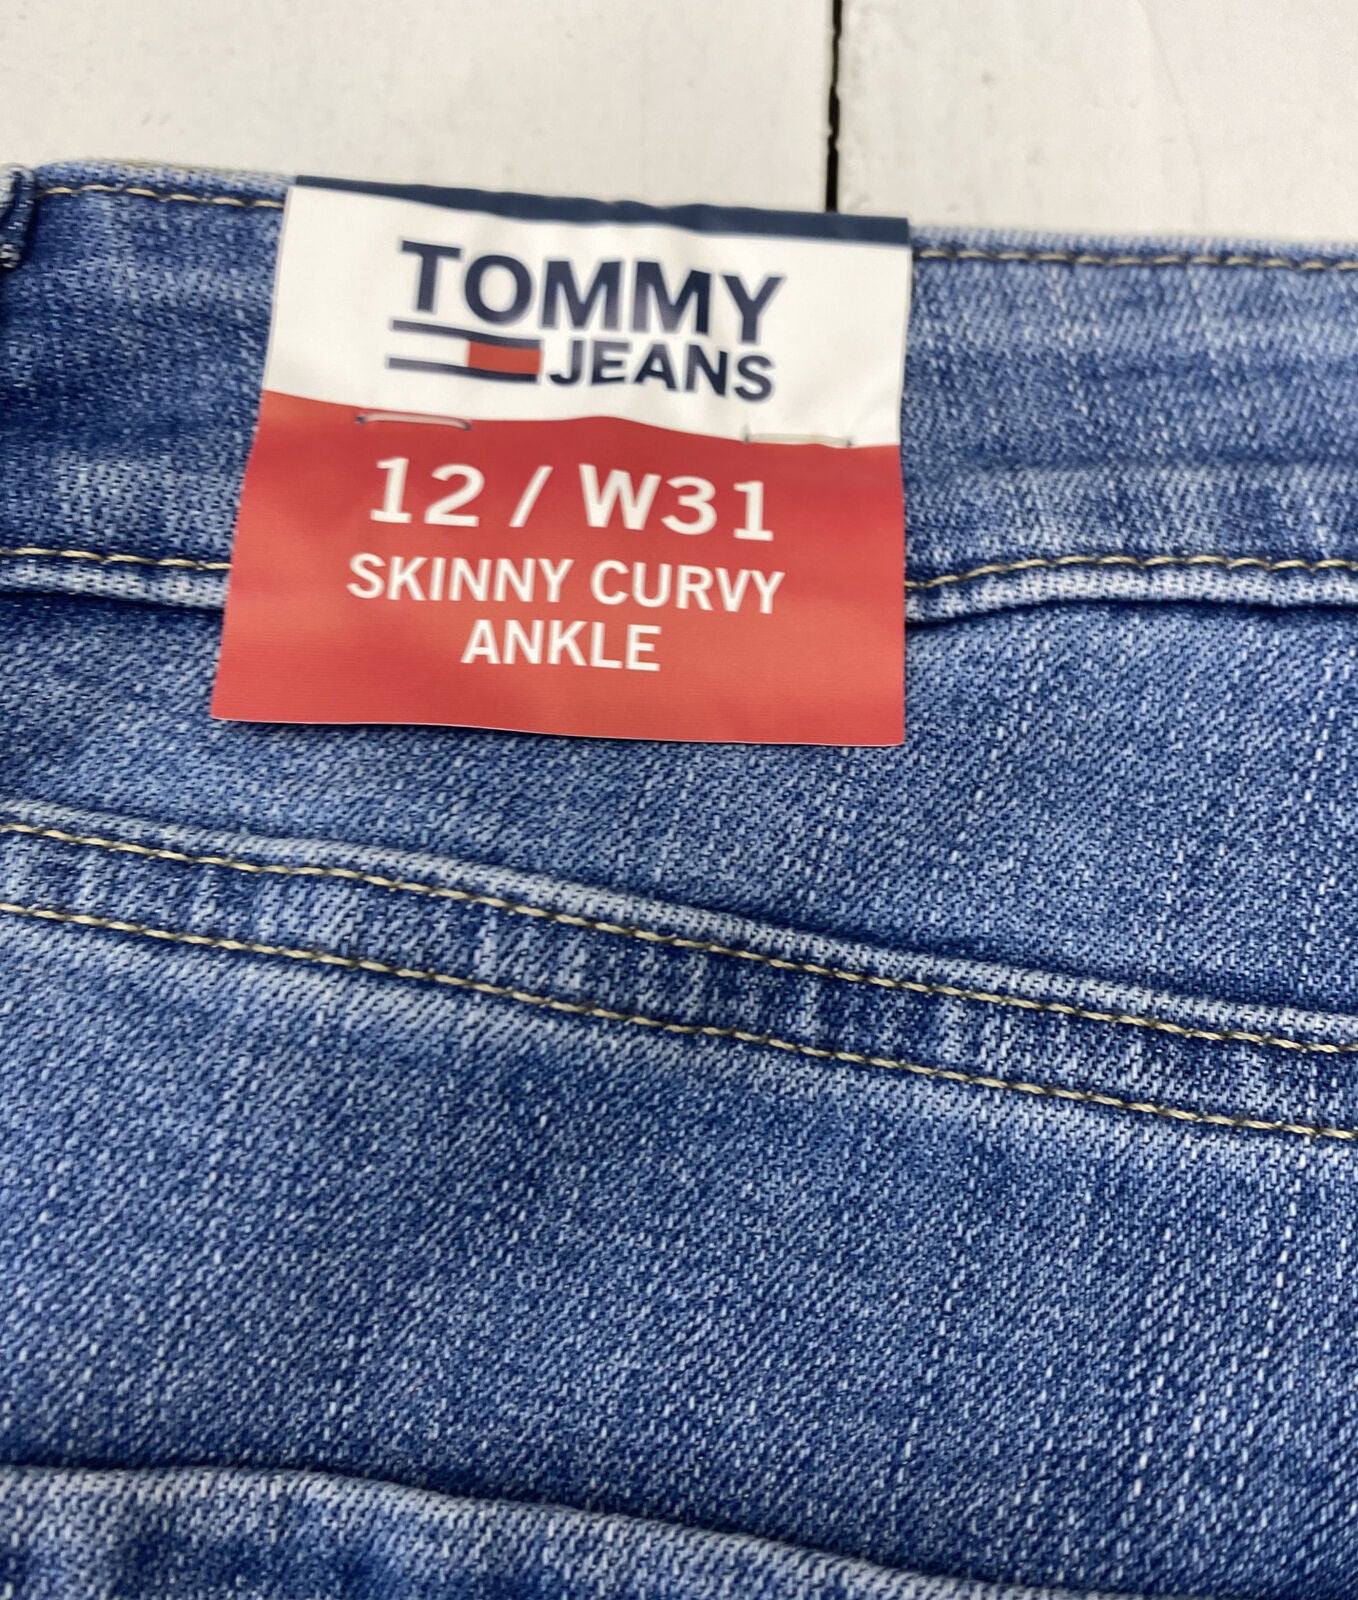 Skinny New Ankle Hilfiger Womens 12/31 Jean Size TOBKOFZC beyond exchange - Tommy Curvy